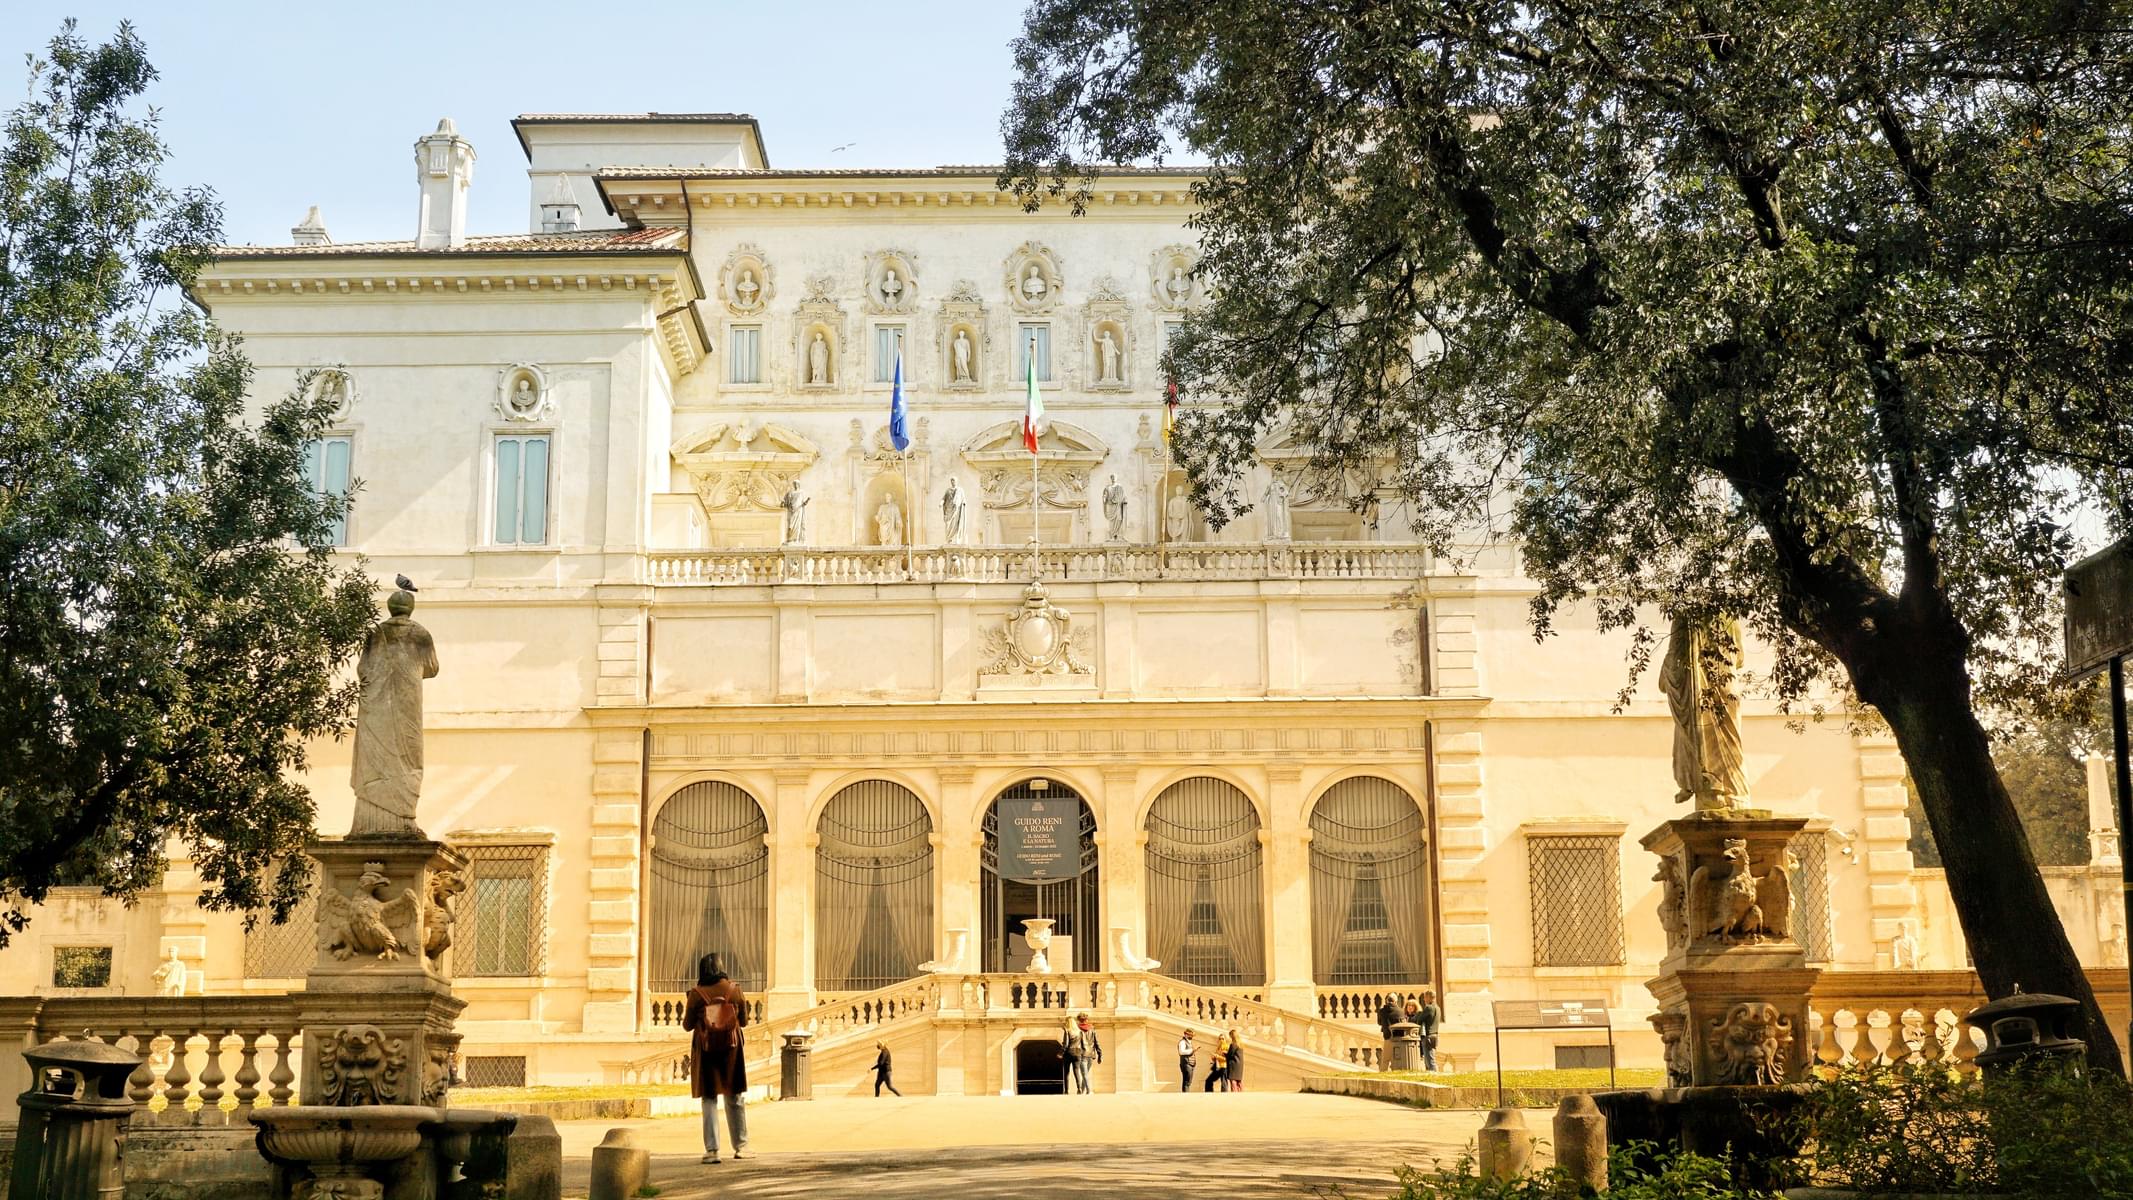 Take a tour of the Galleria Borghese